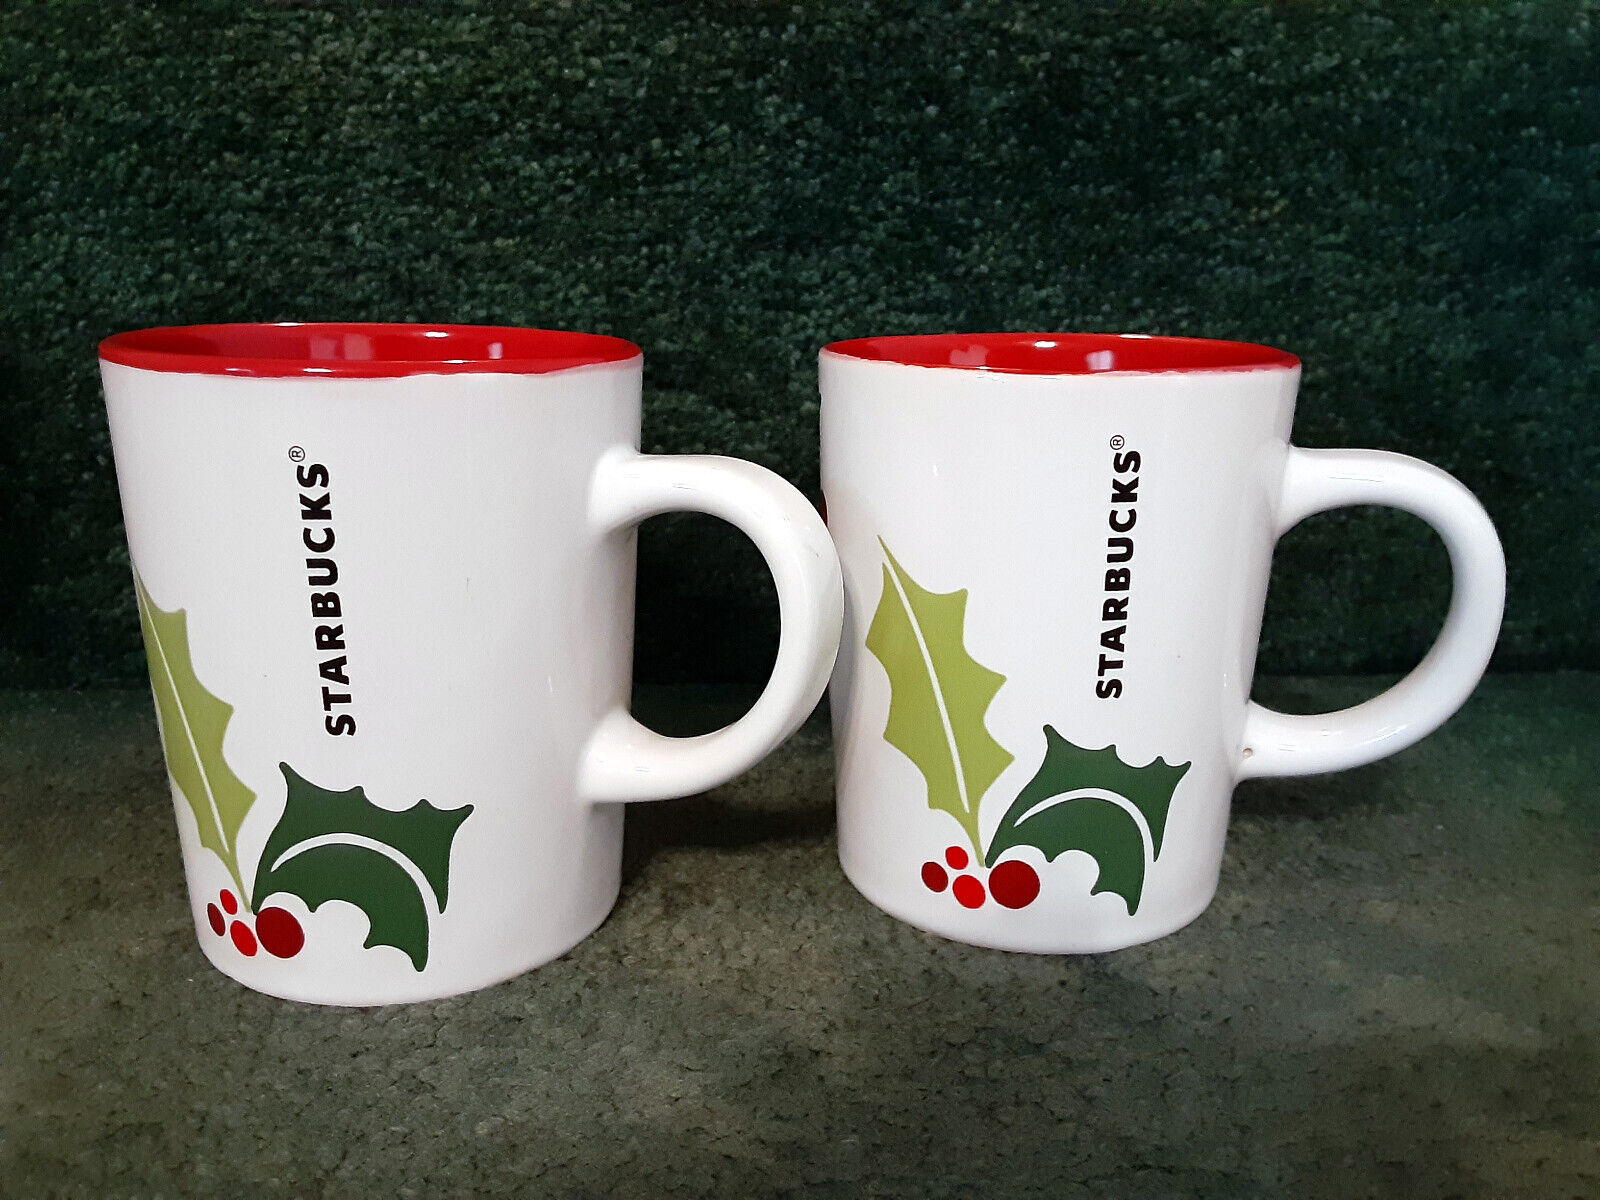 2 Starbucks Coffee Tea Mug Holiday Holly Berry Christmas 9 Oz 2011 Cup White/Red